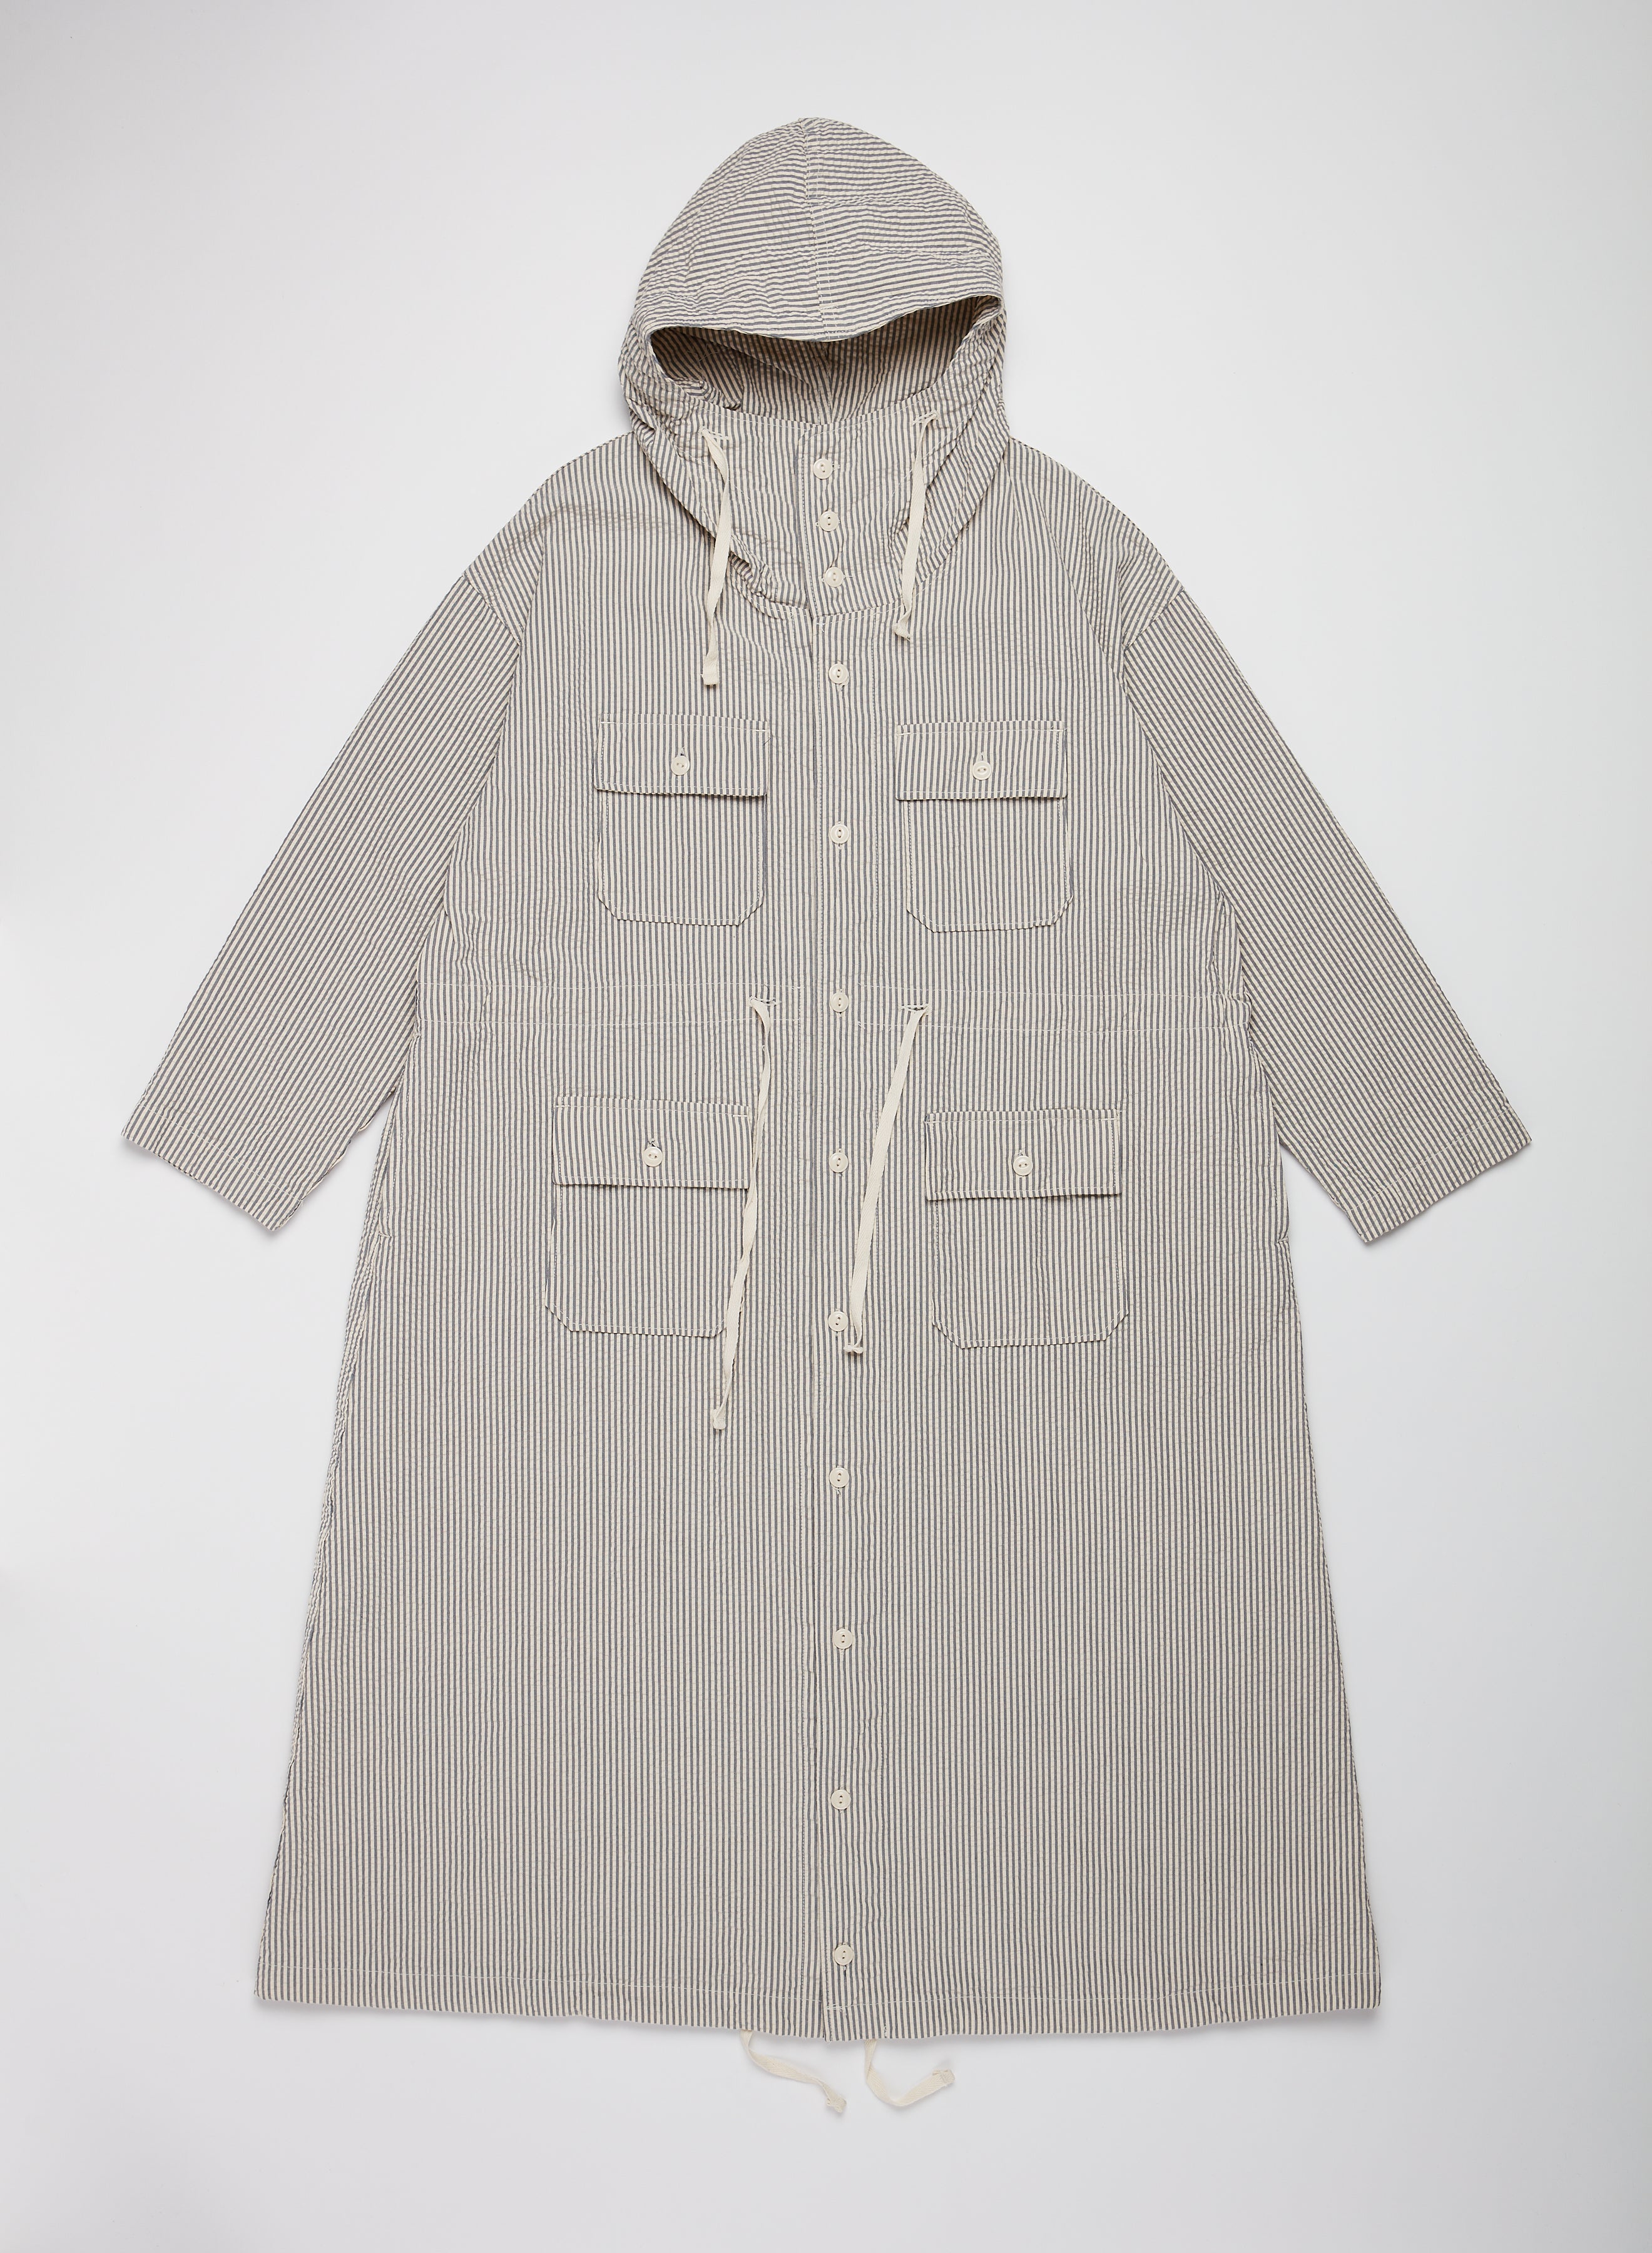 Cagoule Dress - Navy / Natural Cotton Seersucker